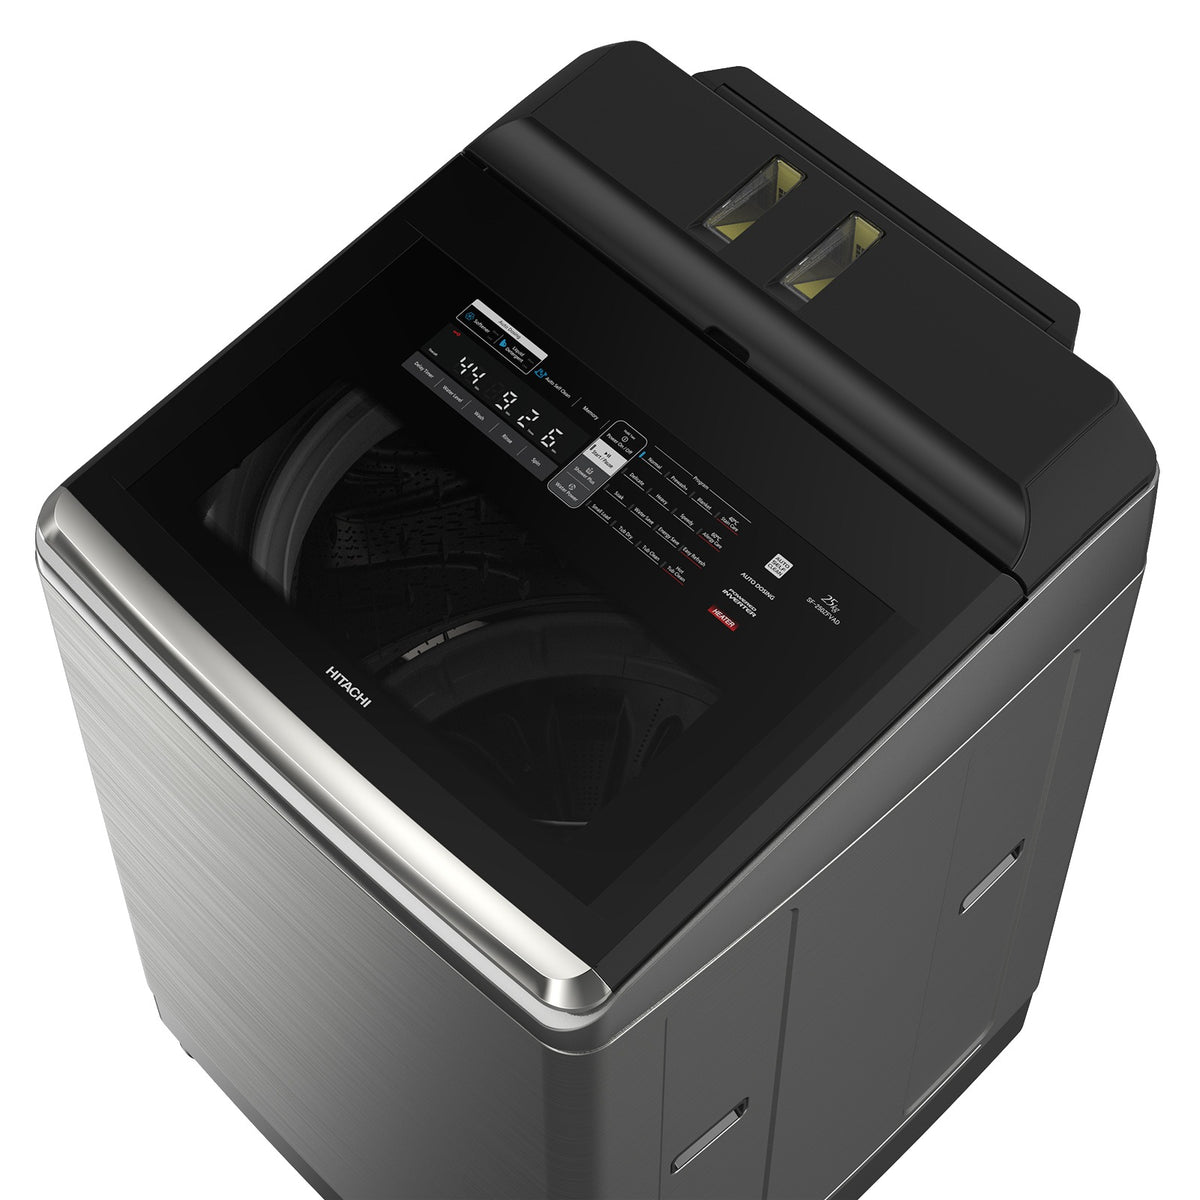 Hitachi Washing Machine | Auto Dose System | Dual Jet Series | SF 